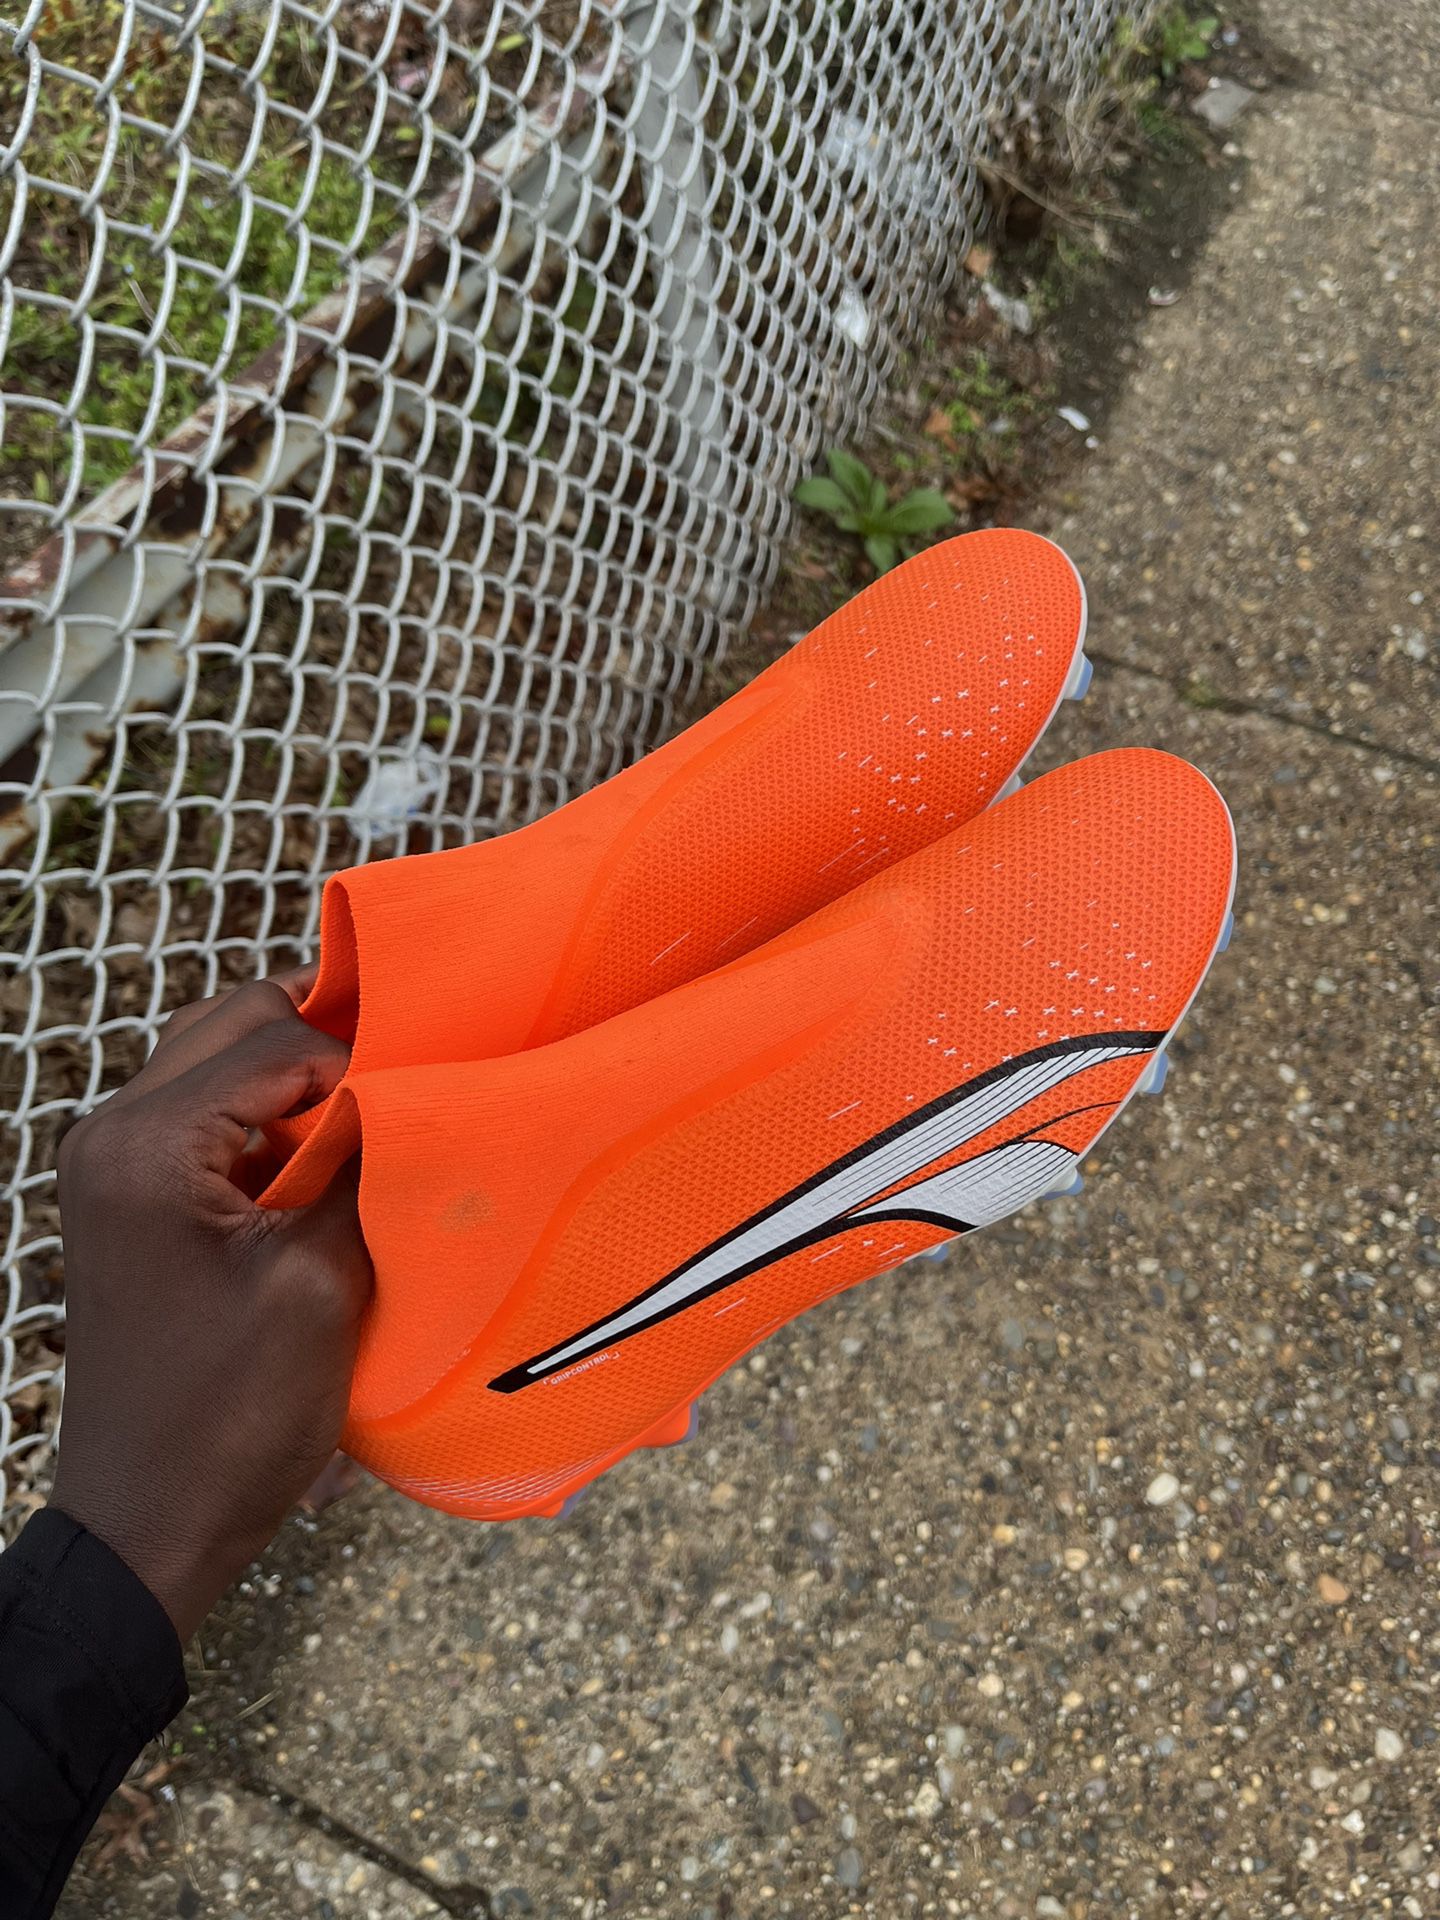 Classic Orange Soccer Cleats